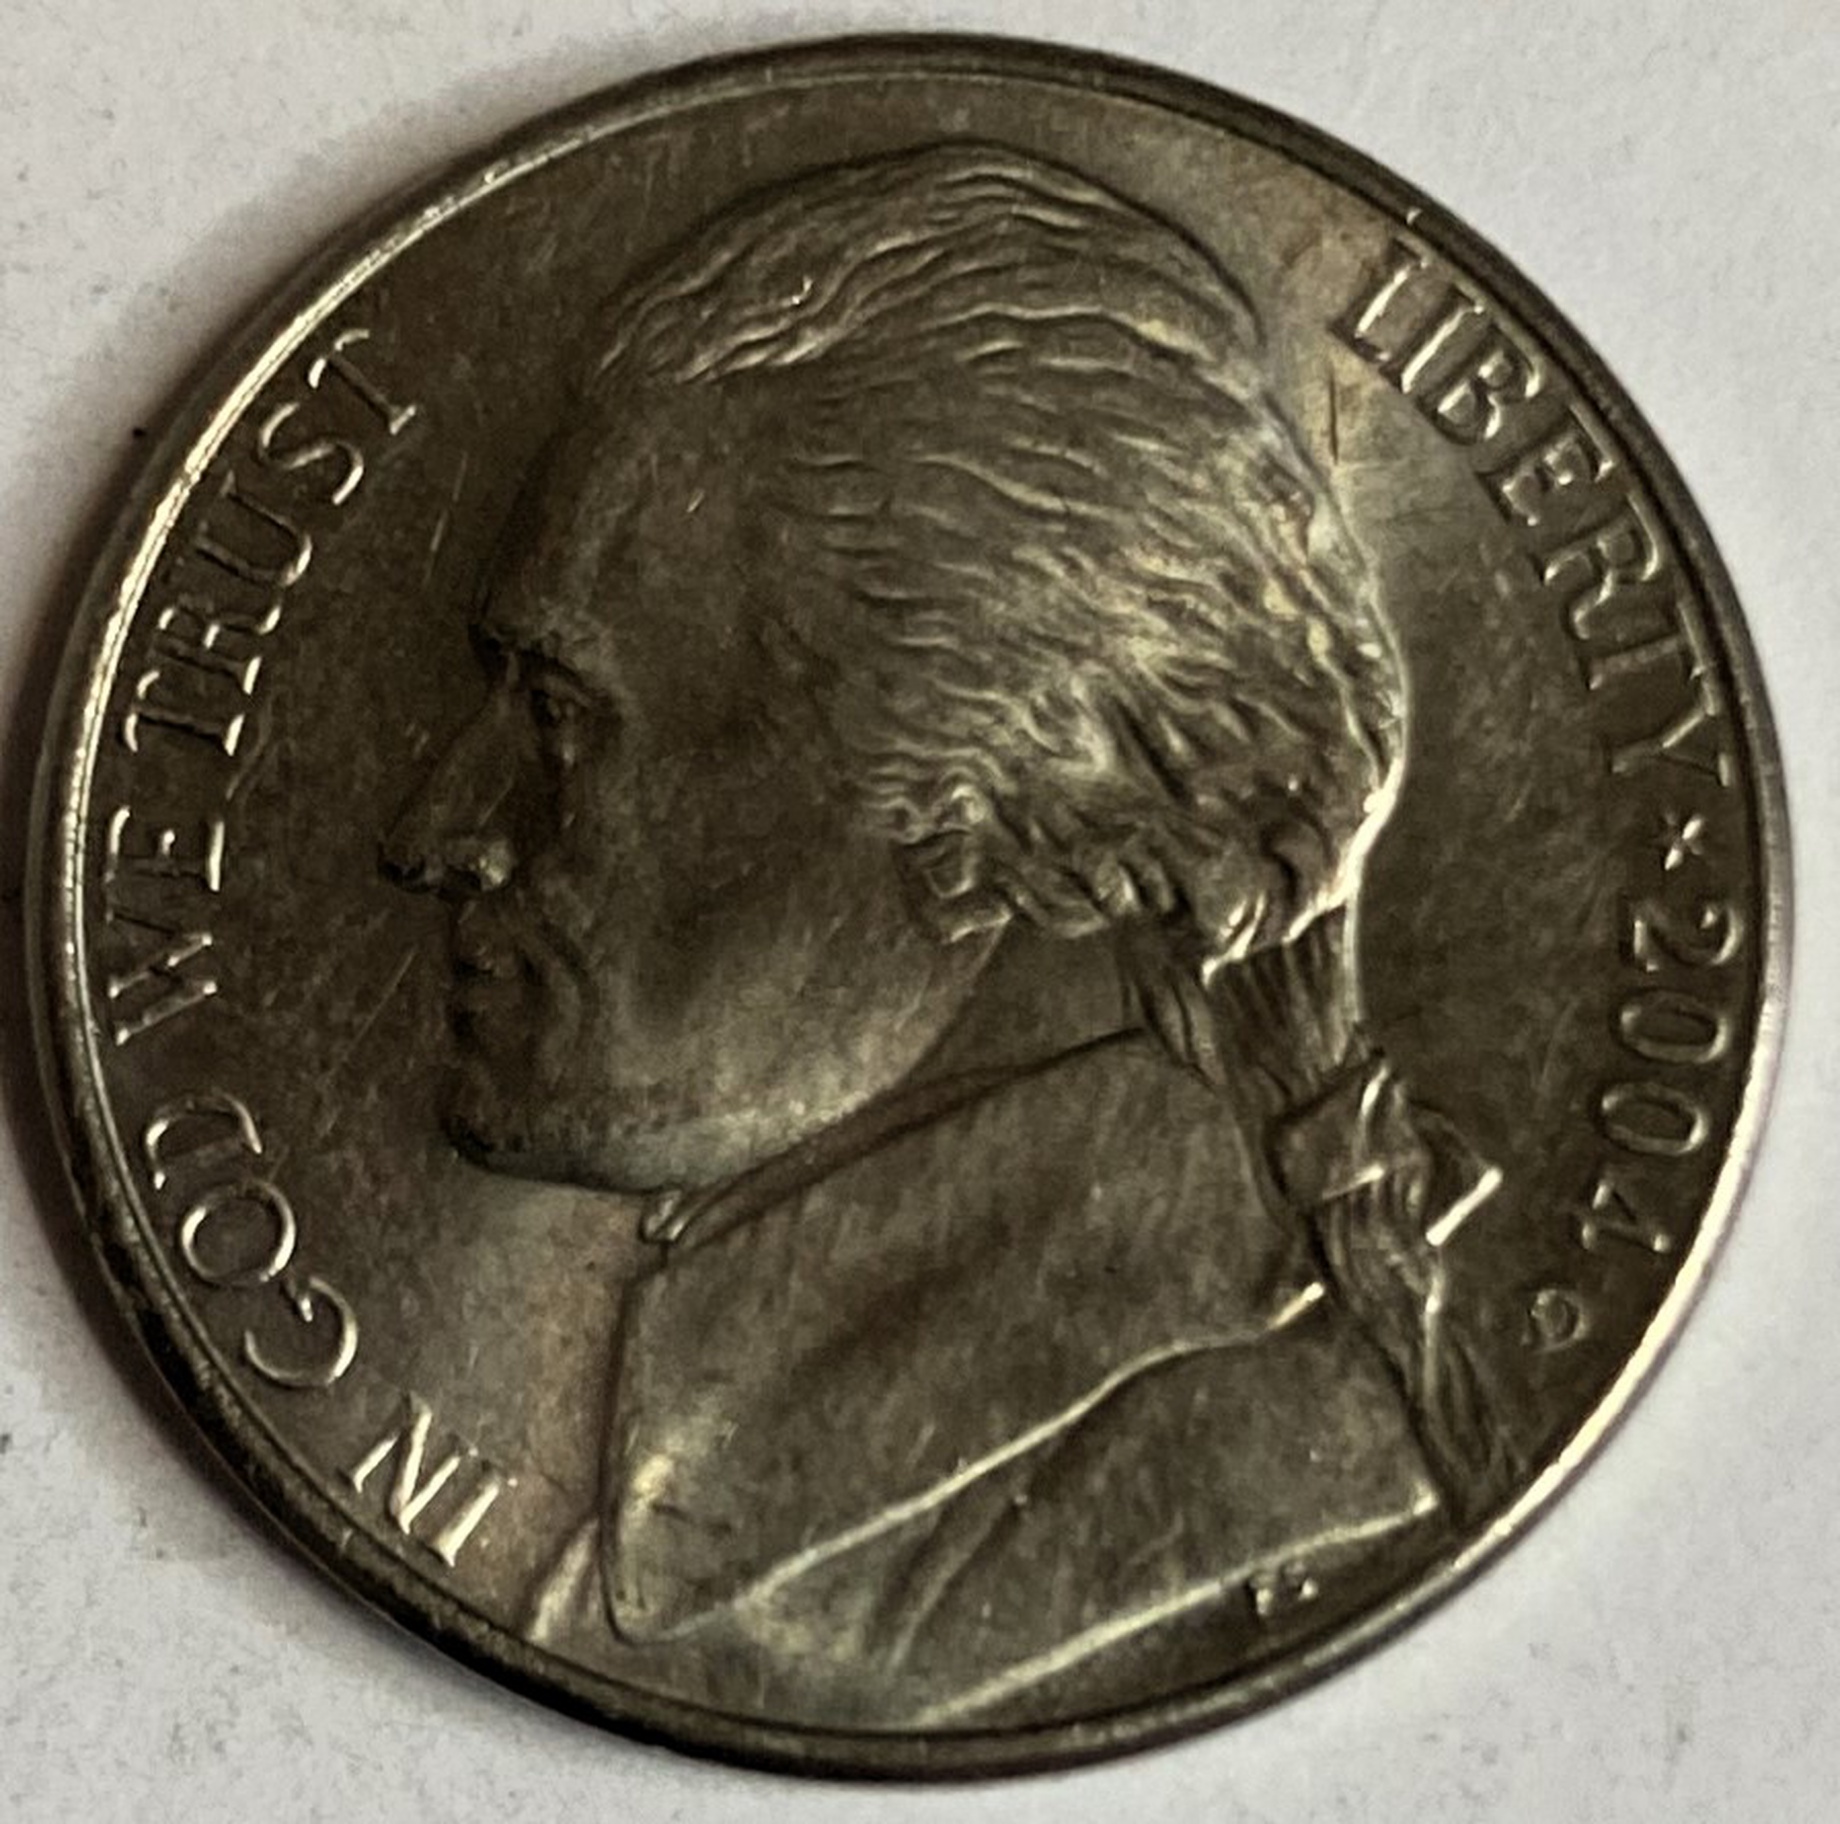 Иностранная монета США 5 центов 2004 год Америка